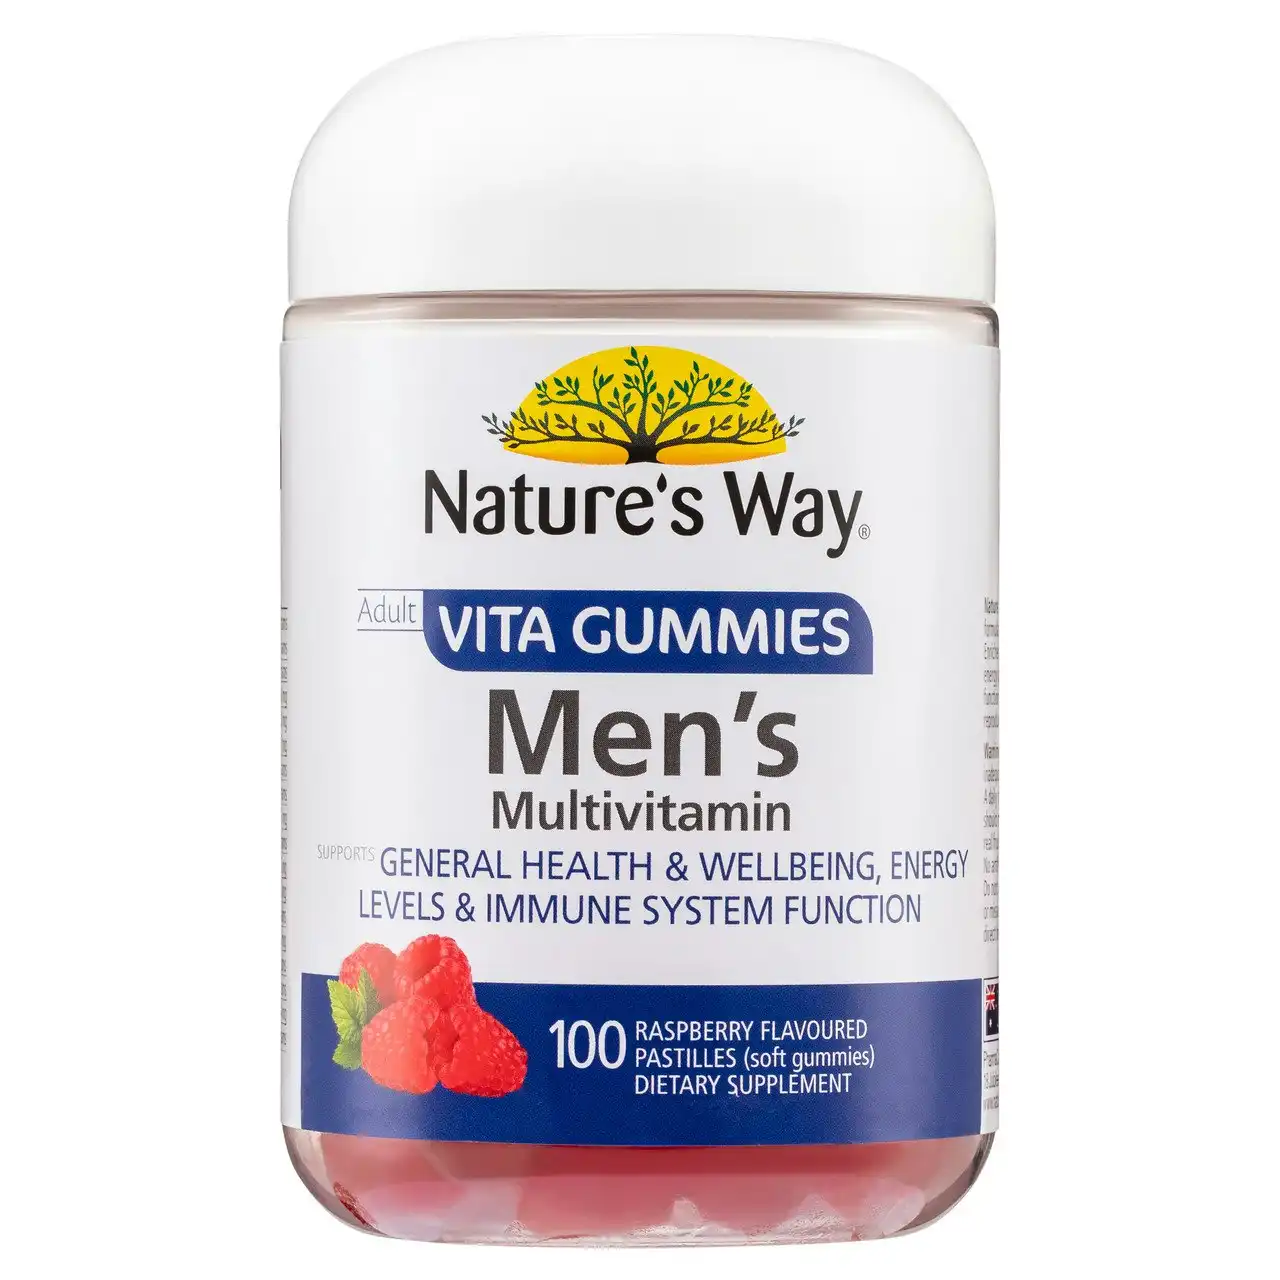 Nature's Way Adult Vita Gummies Men s Multivitamin 100's